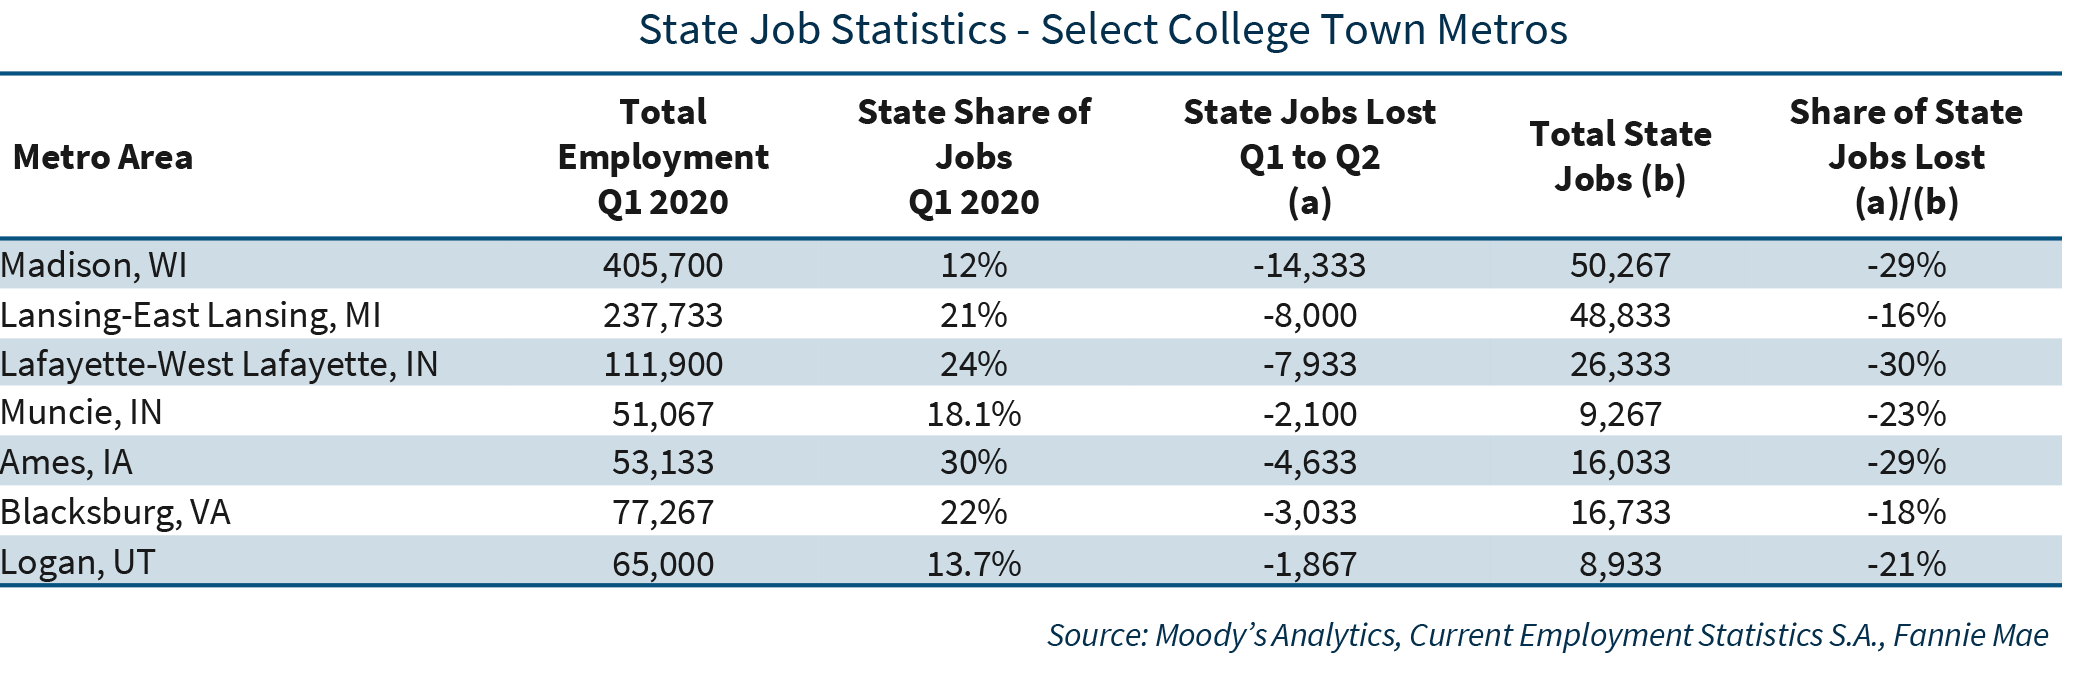 State Job Statistics - Select College Town Metros